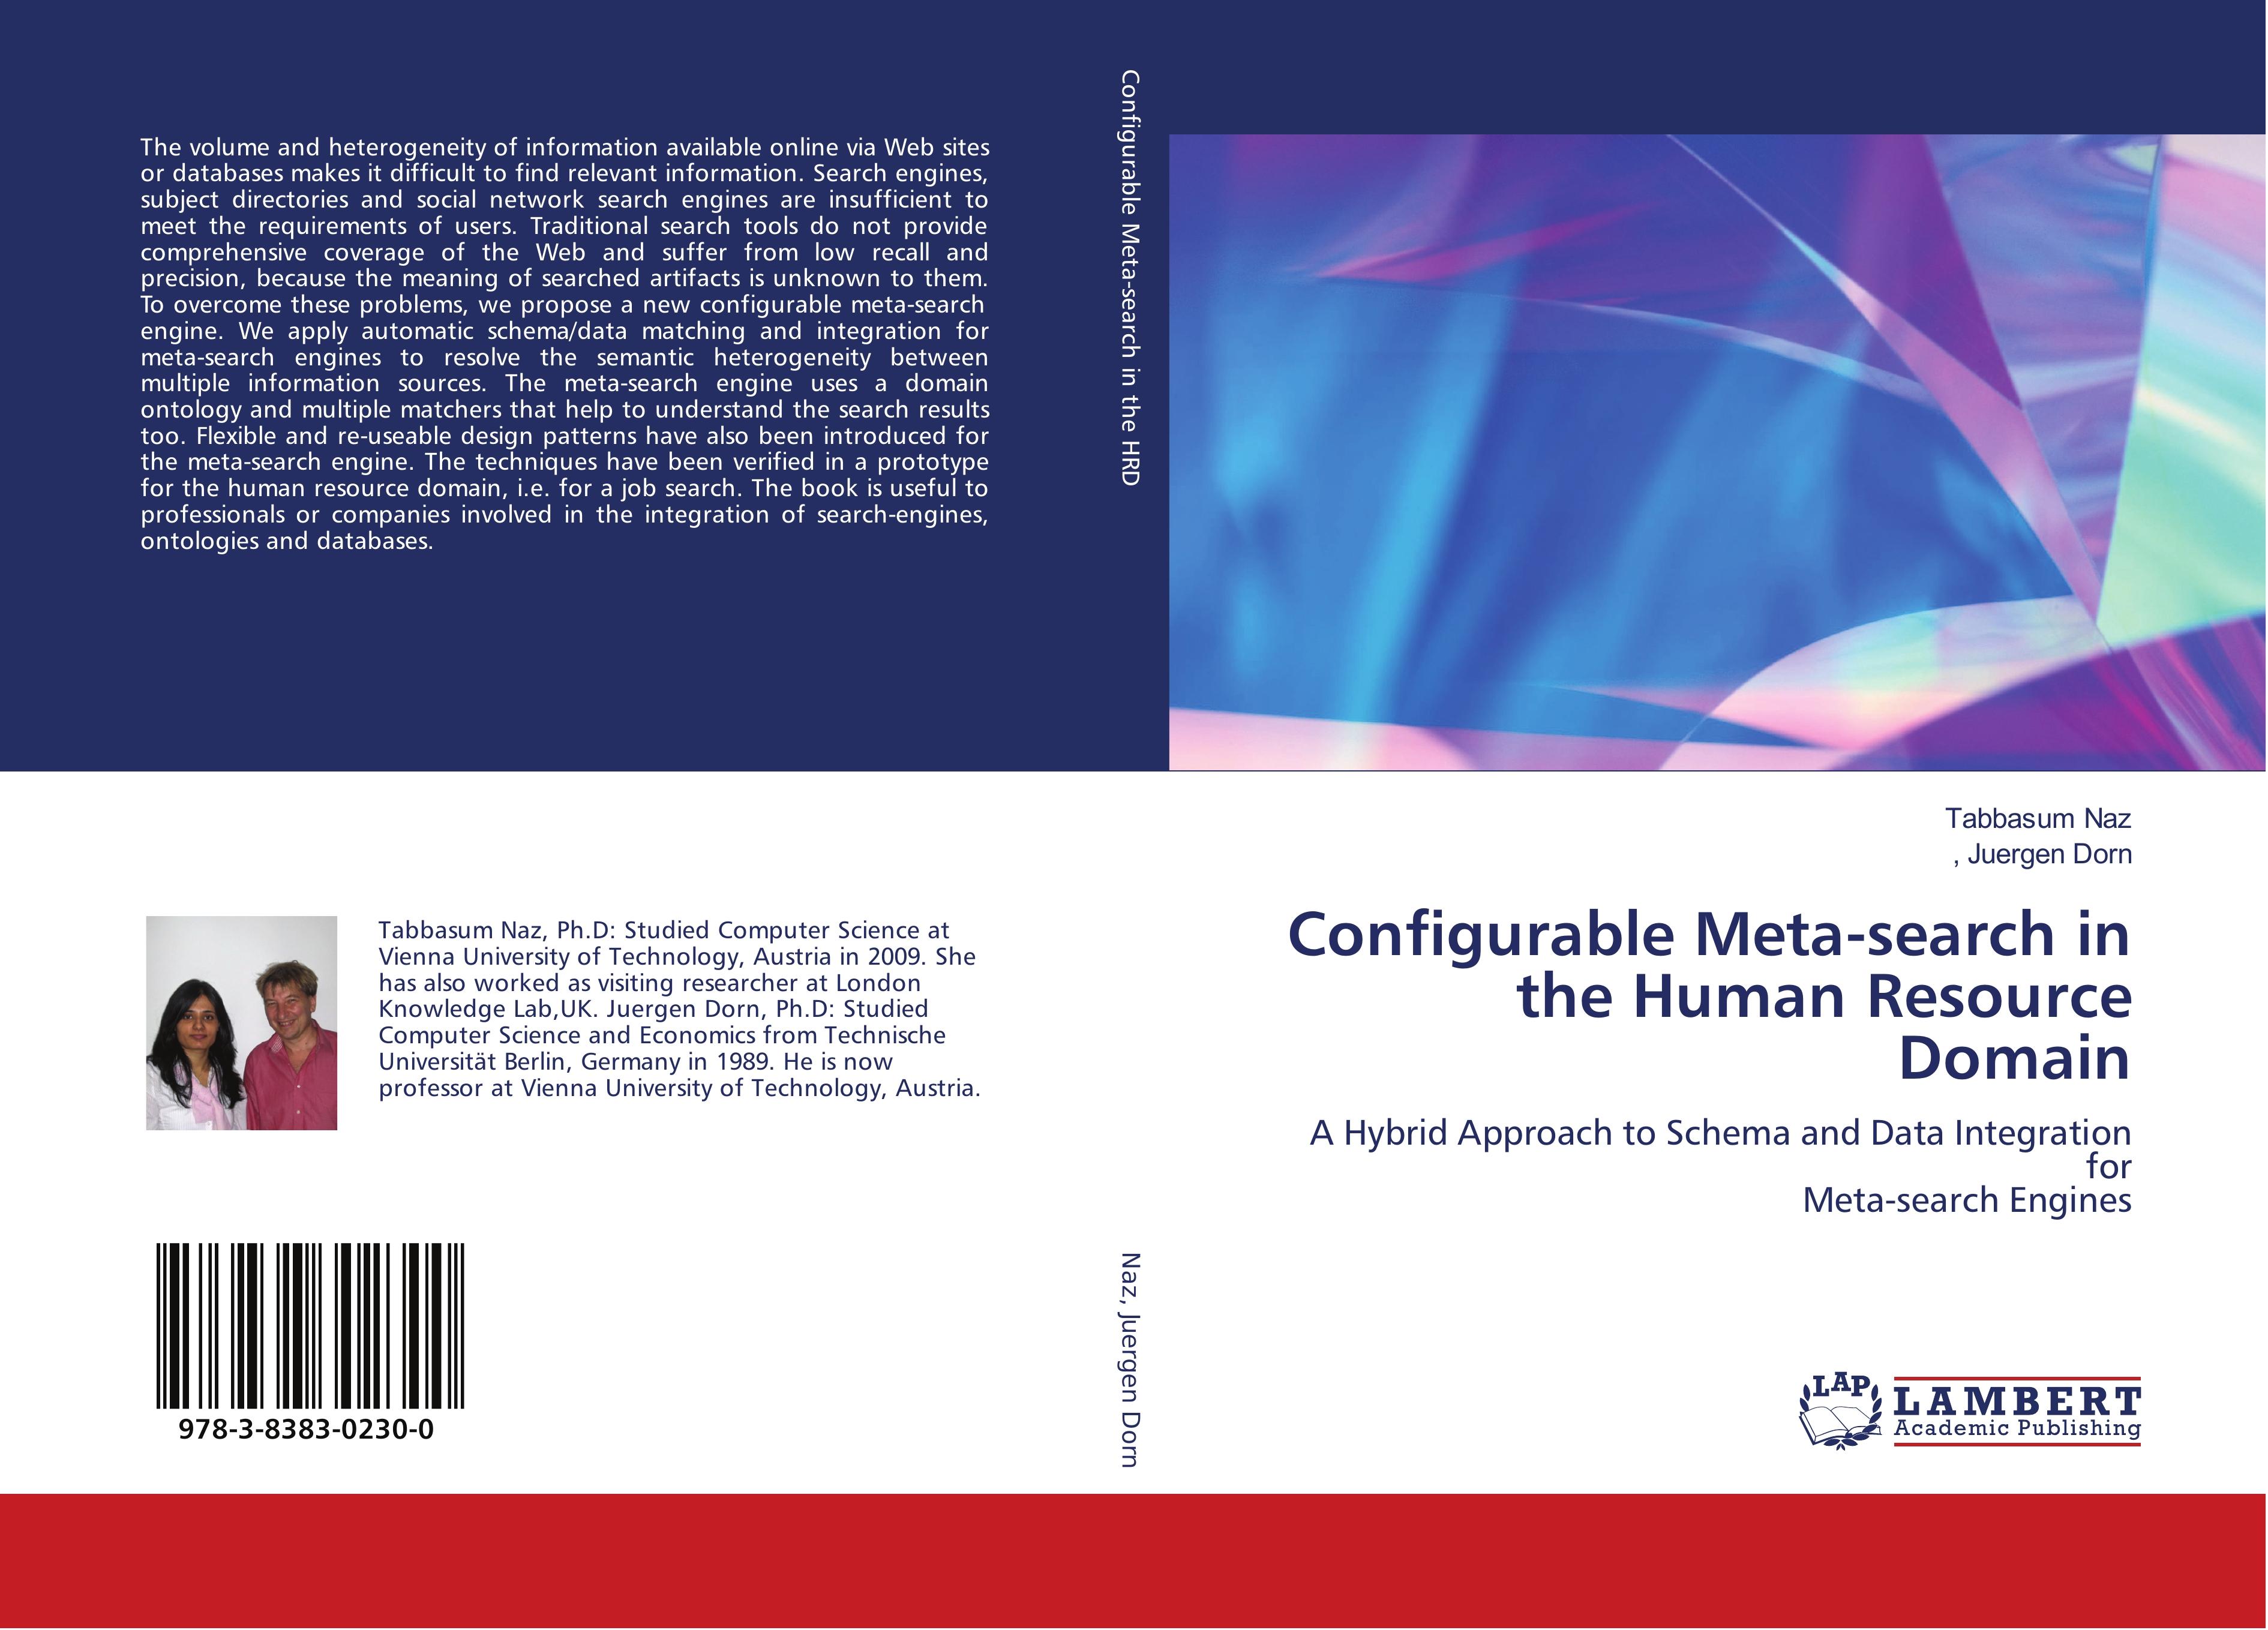 Configurable Meta-search in the Human Resource Domain - Naz, Tabbasum Juergen Dorn,